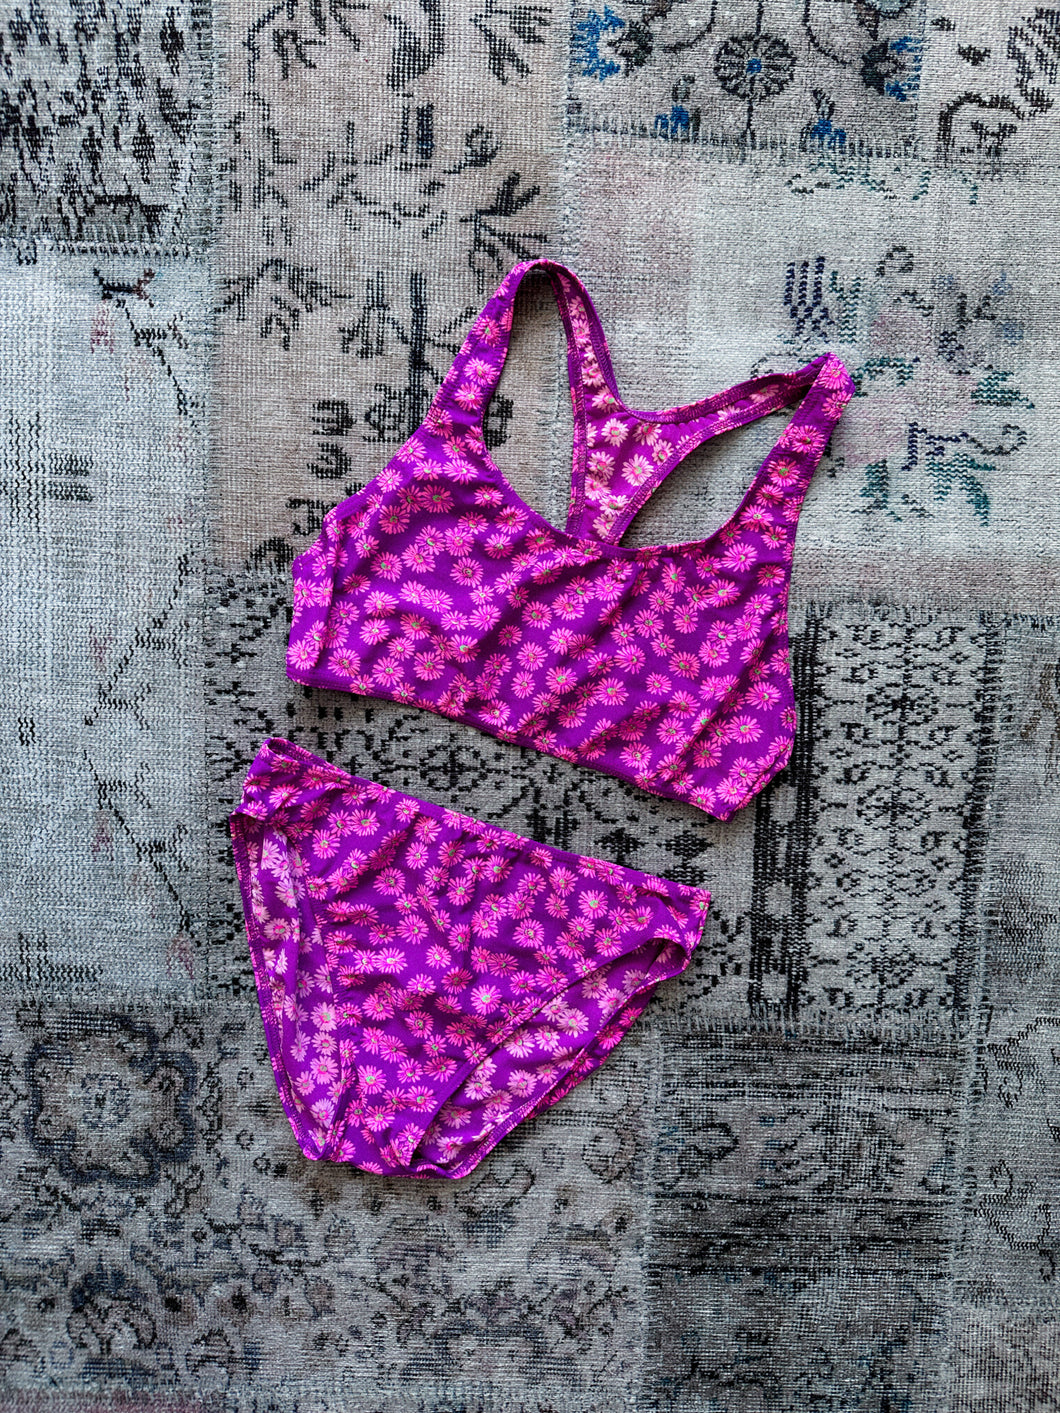 1980s/1990s Magenta Neon Pink Sunflower Bikini Set